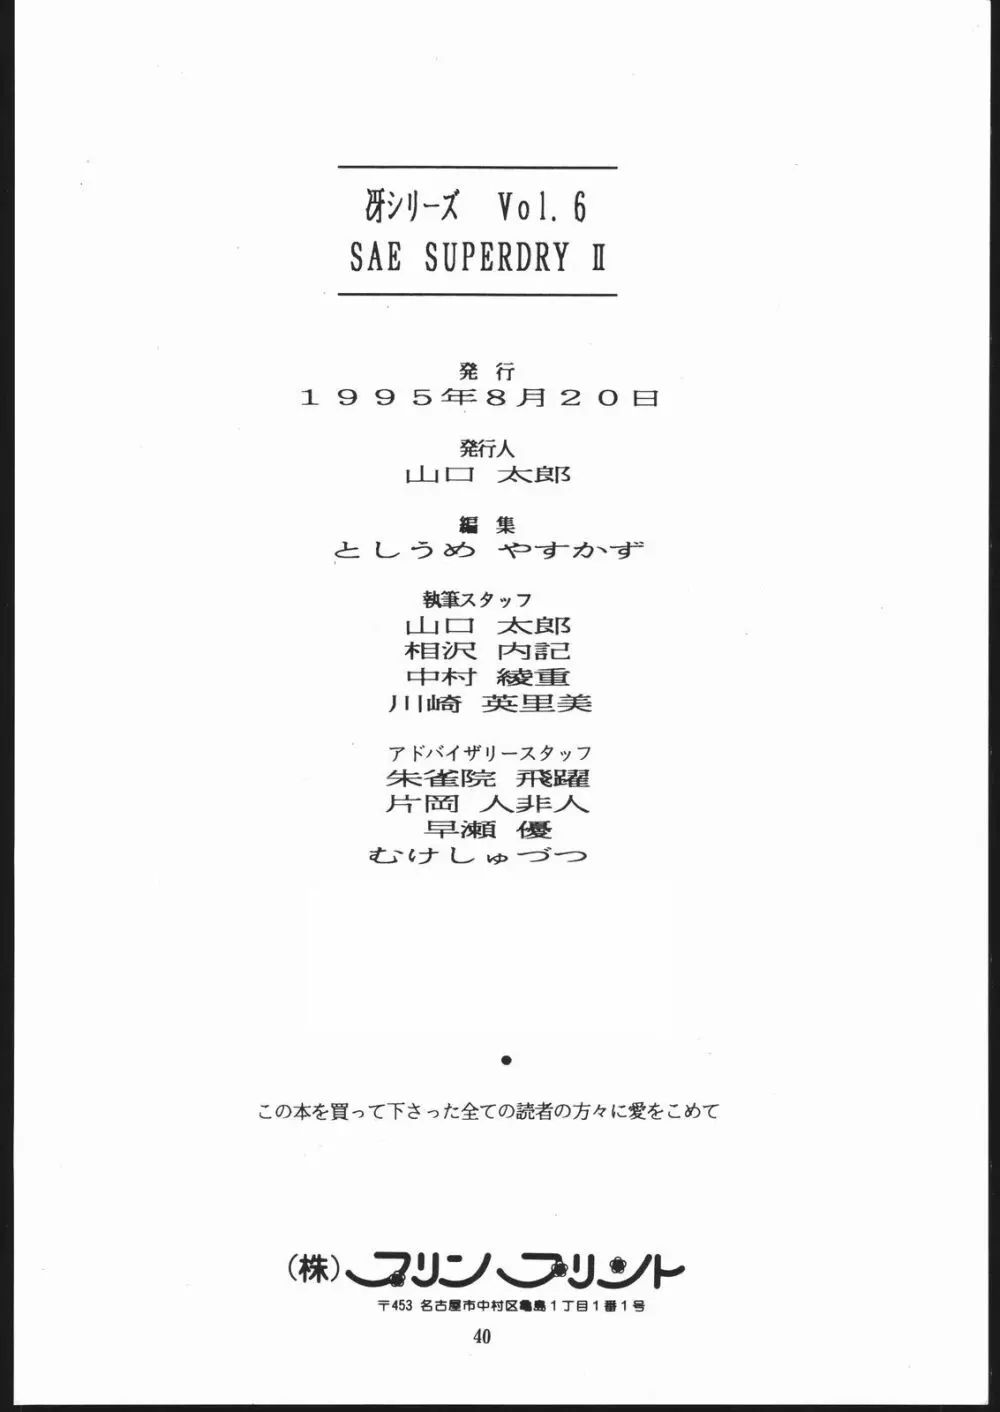 SAE SUPERDRY II 41ページ